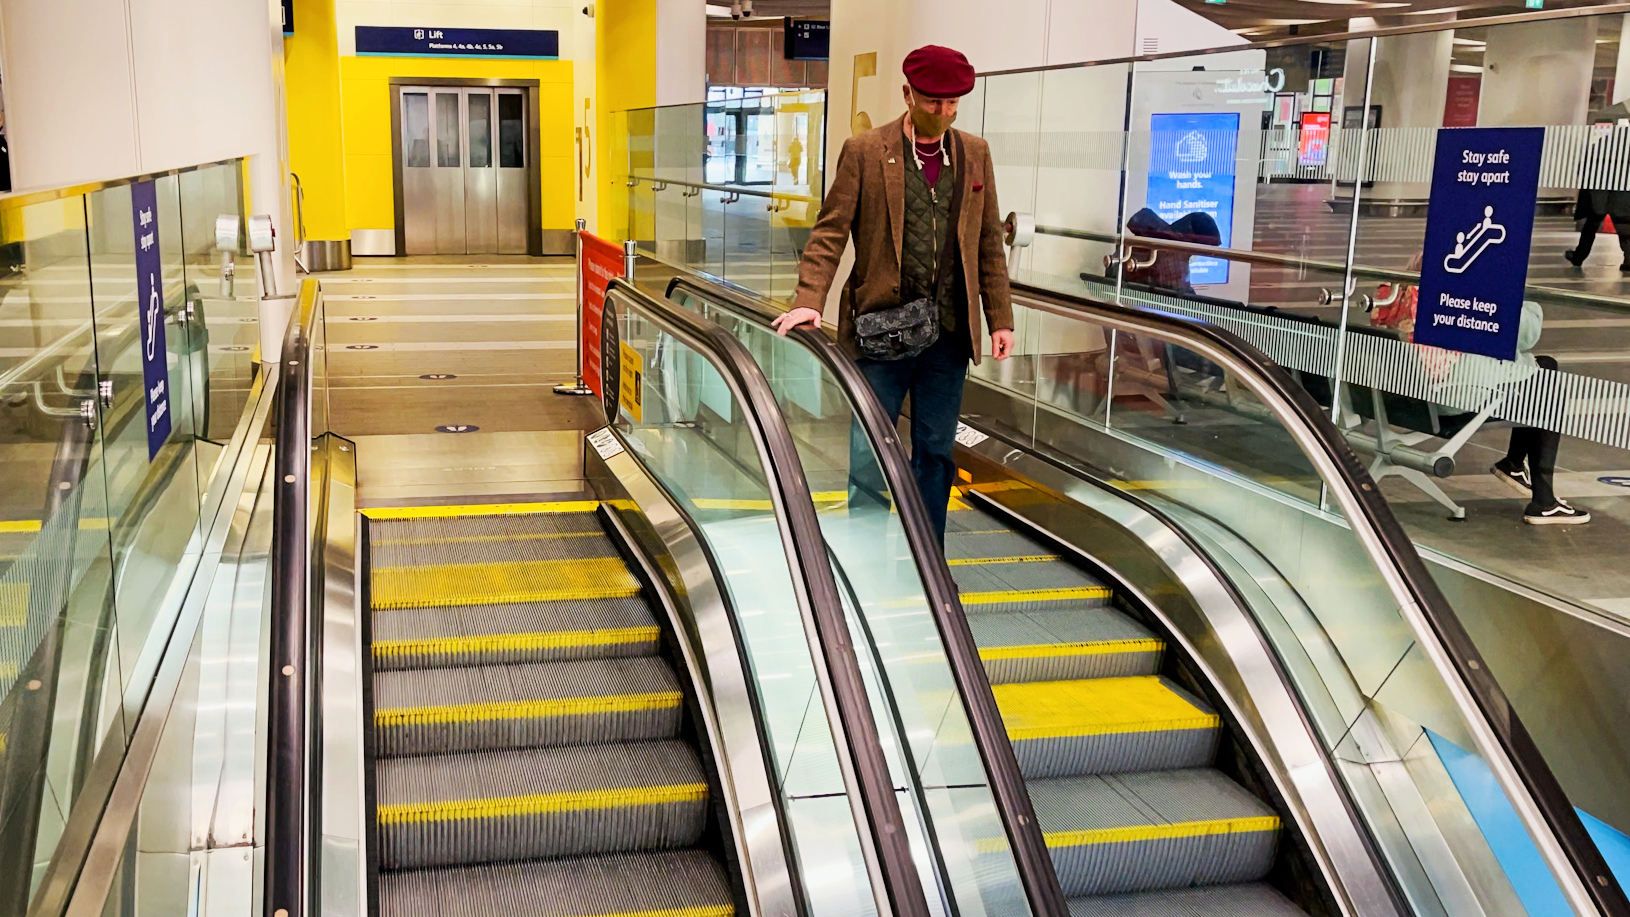 Escalator Handrails 20 Times Dirtier than Toilet Seats, Study Reveals